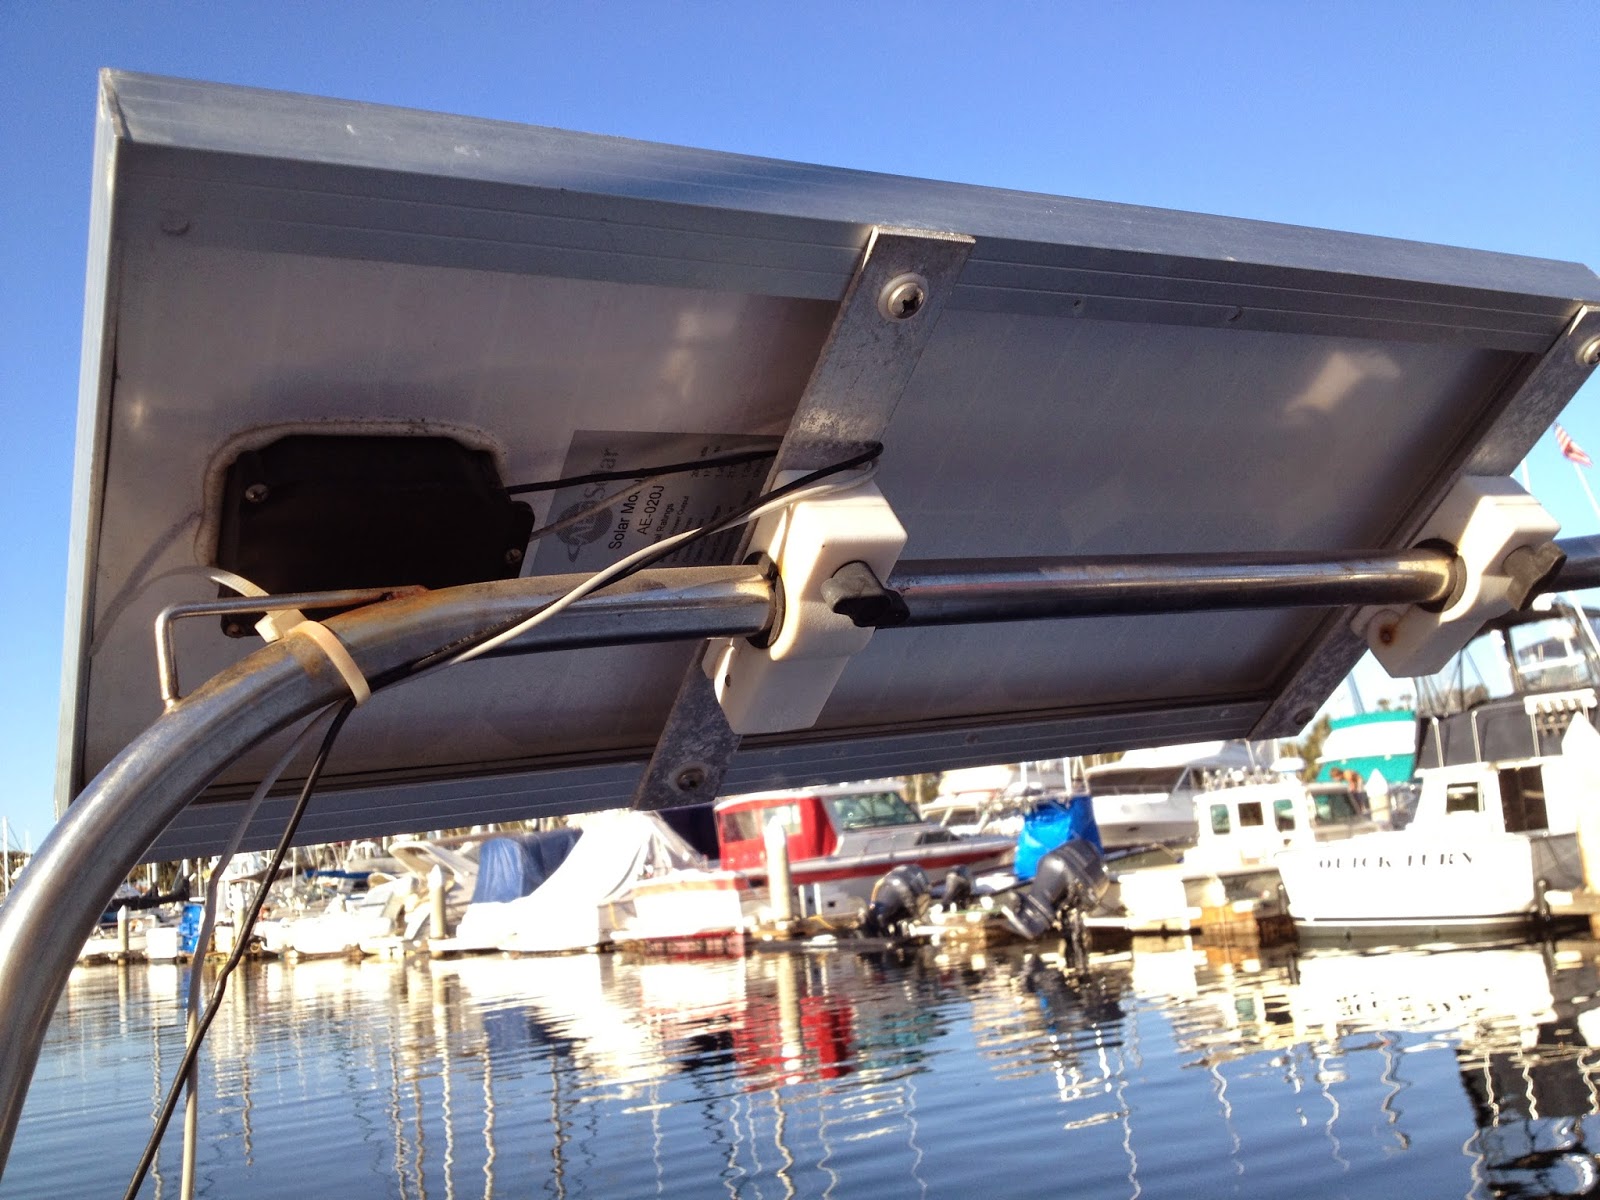 Captain Curran's sailing blog: DIY: Solar panels for boats